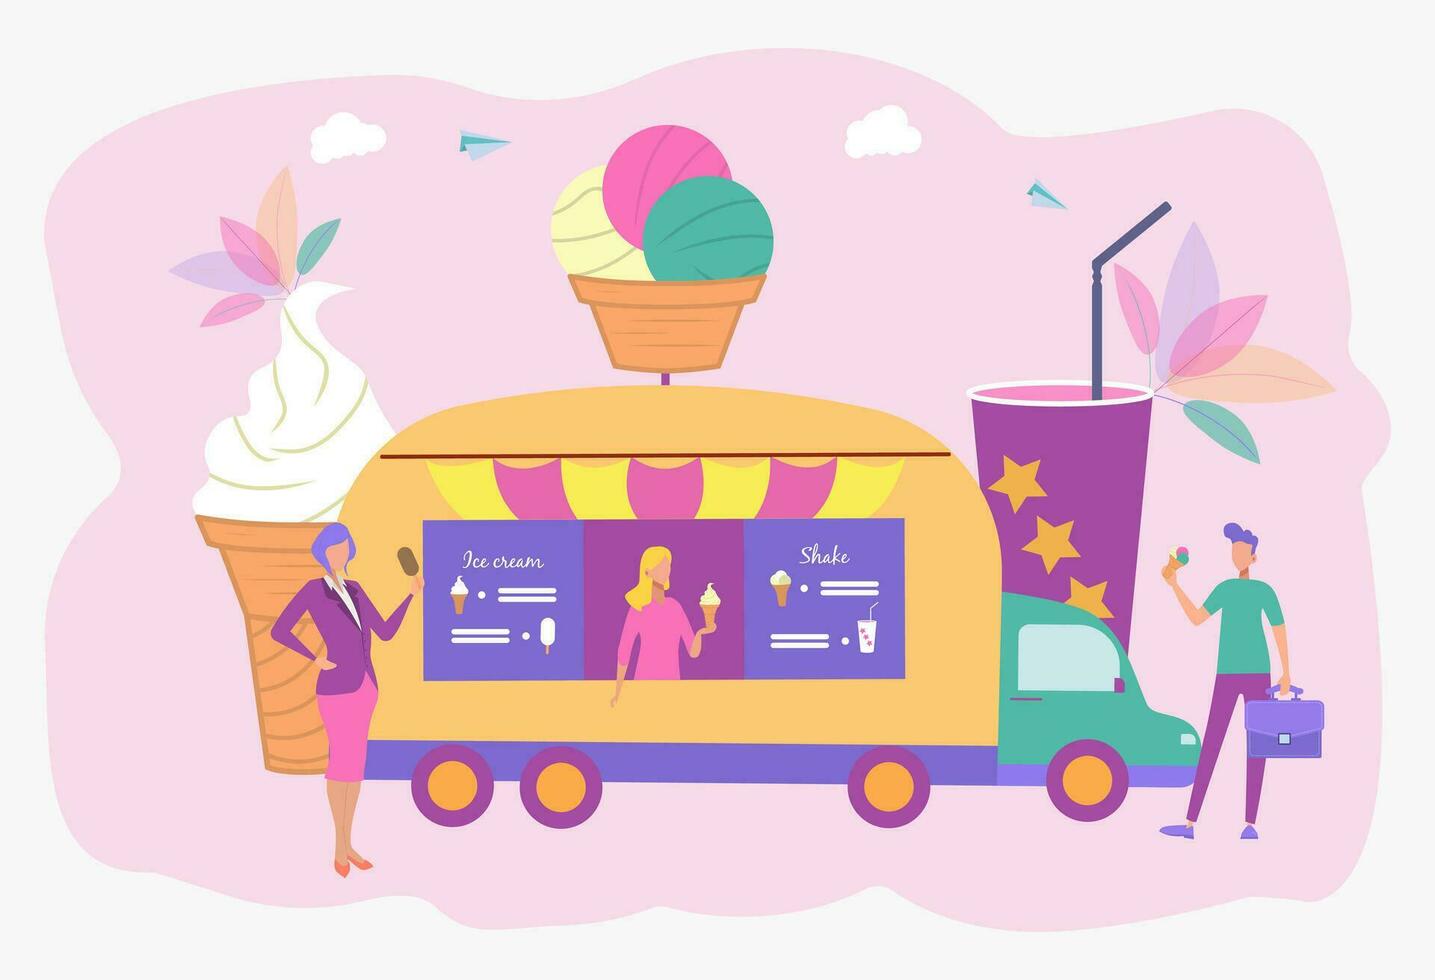 People eat ice cream and shake. Fast food on wheels. Street food, urban food truck, street food festival concept. Colorful vector illustration.